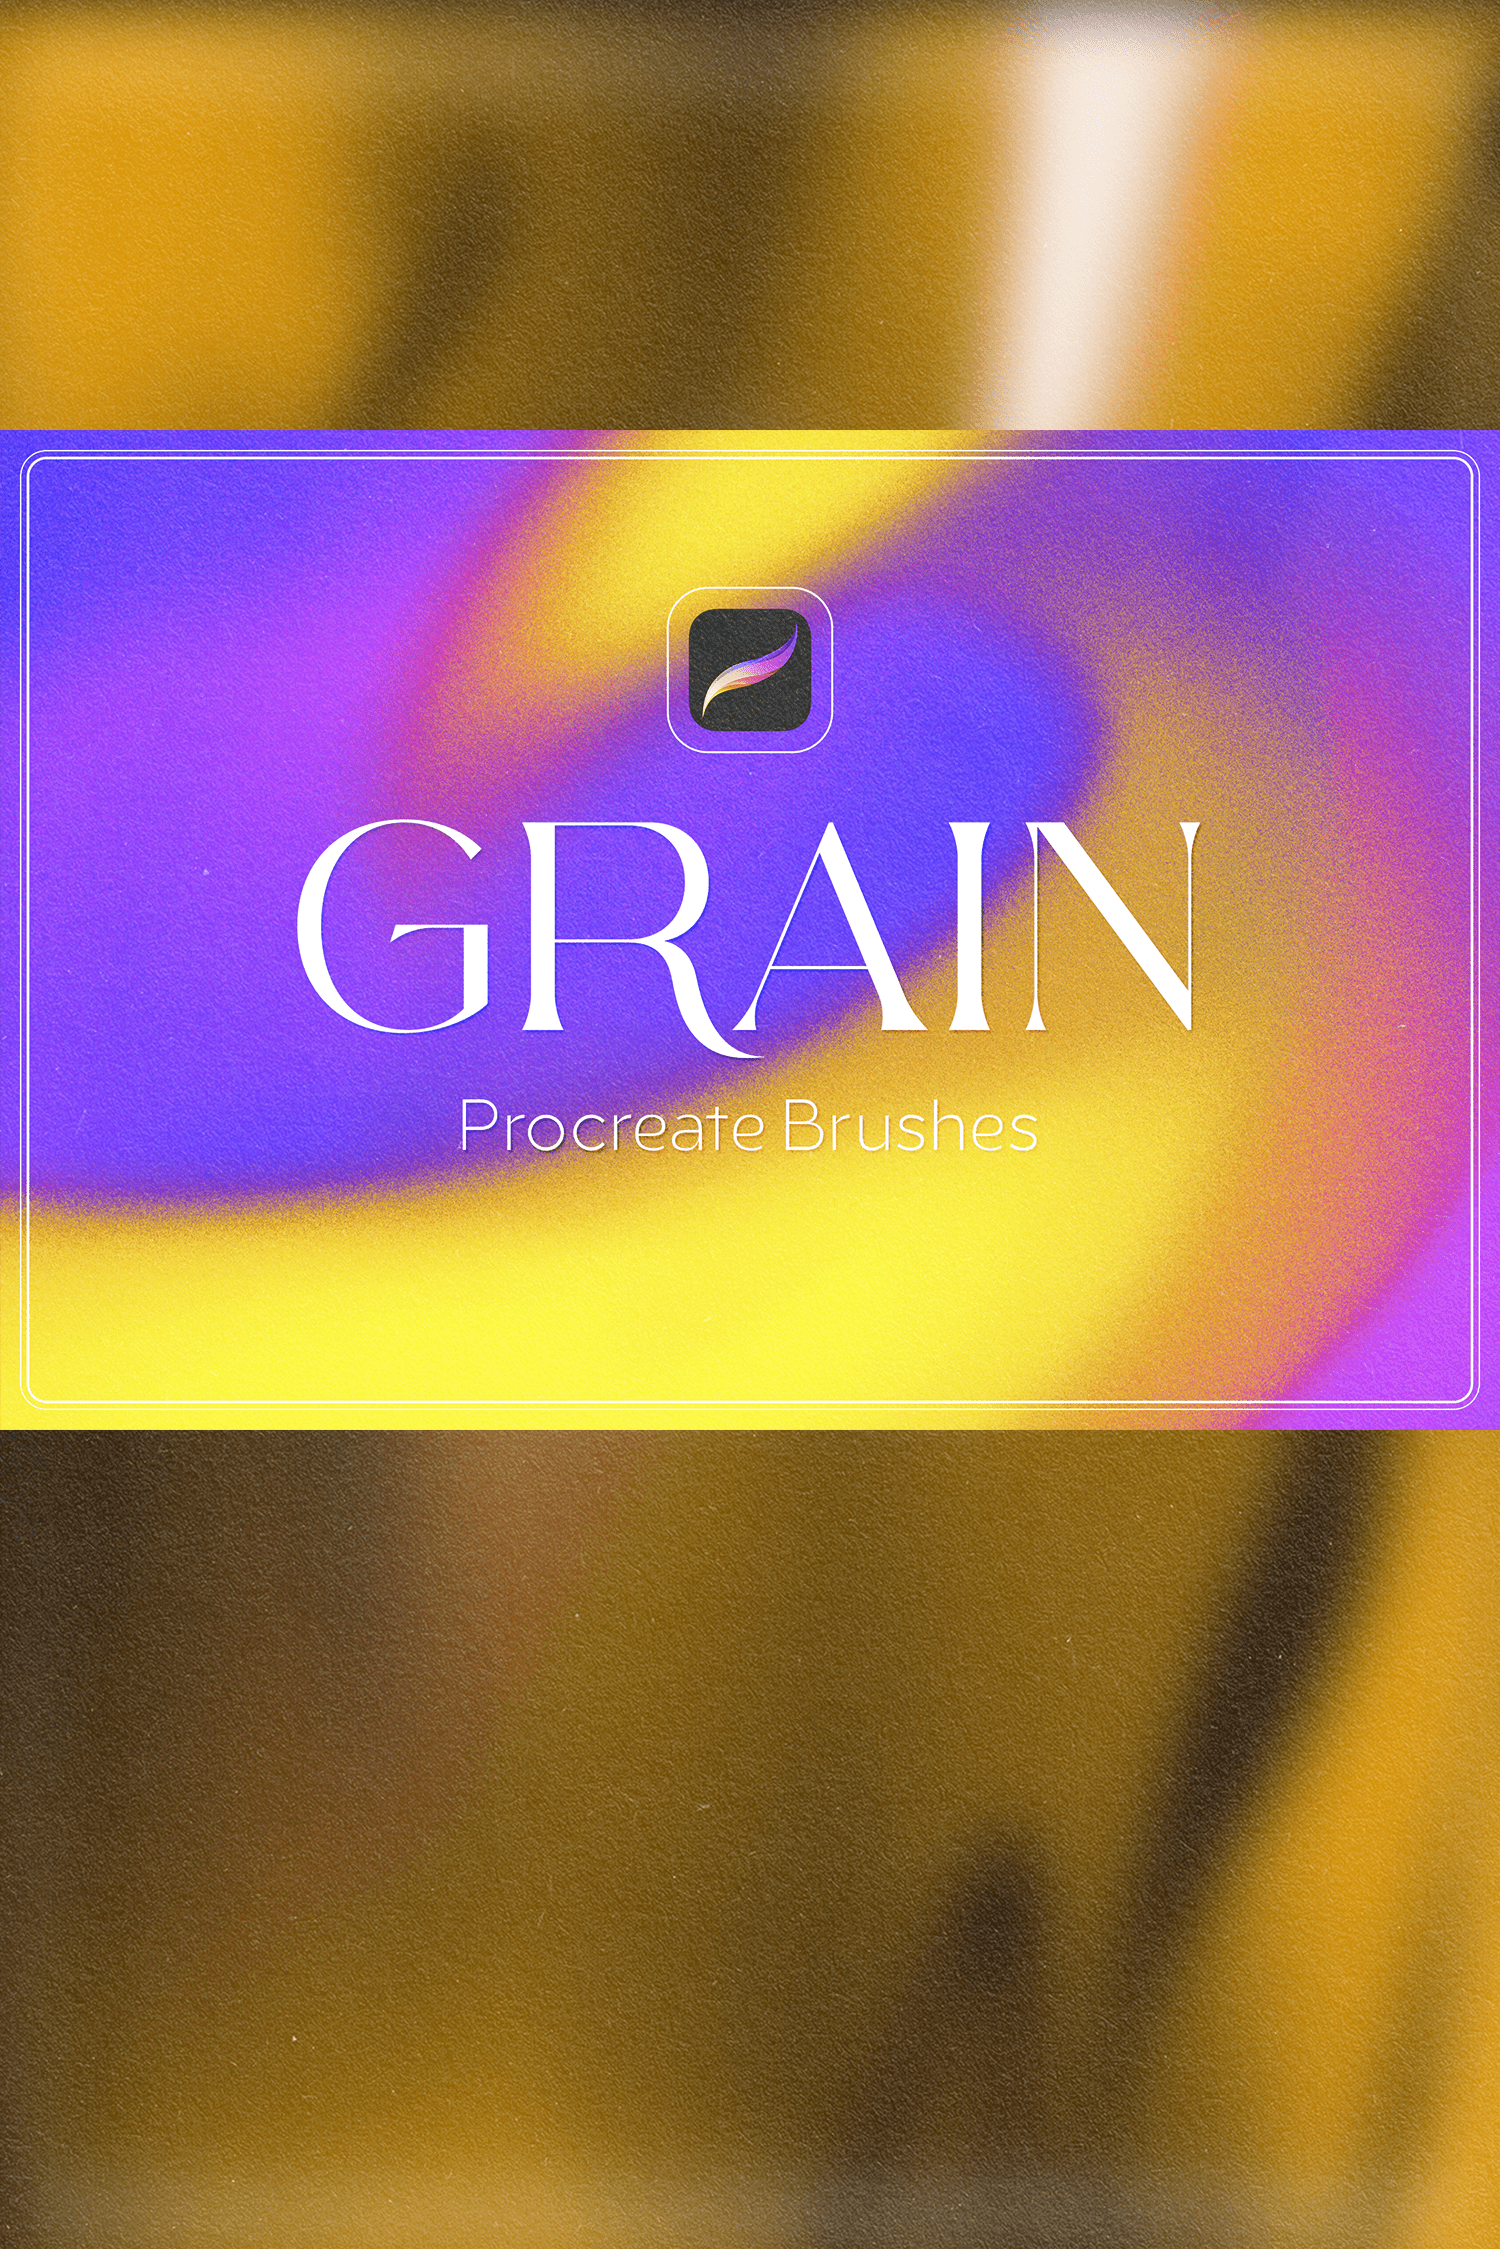 Grain Background Brushes By Andrew Skoch